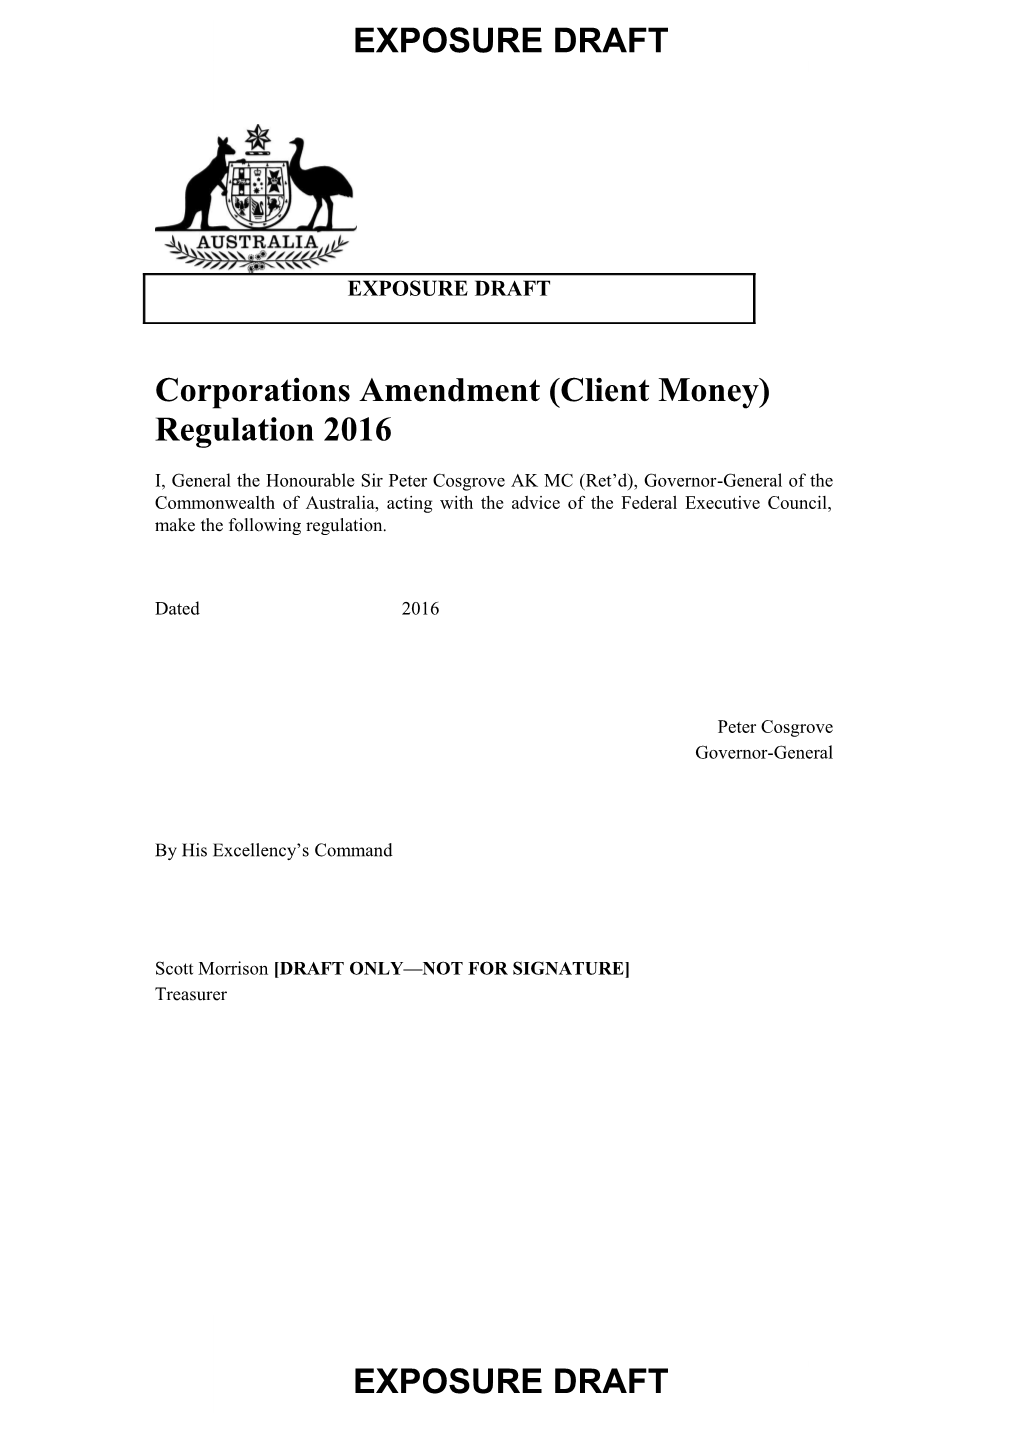 Exposure Draft - Corporations Amendment (Client Money) Regulation 2016